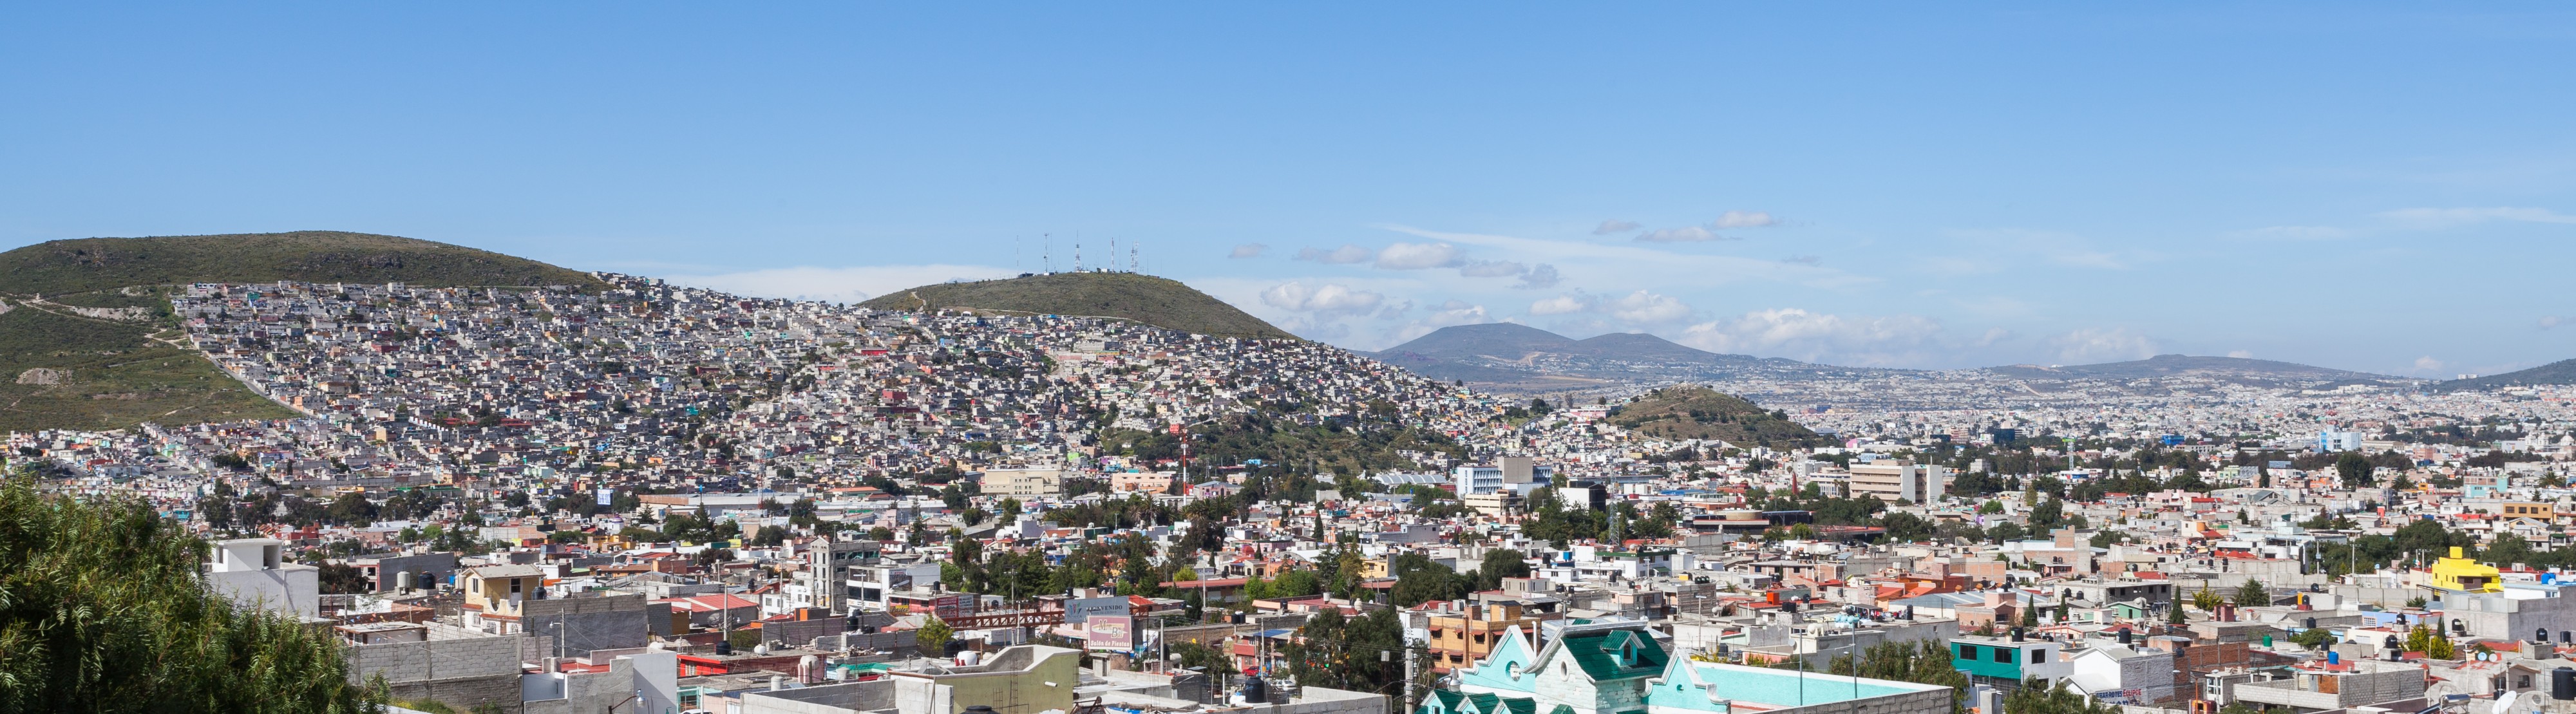 Vista de Pachuca, Hidalgo, México, 2013-10-10, DD 02